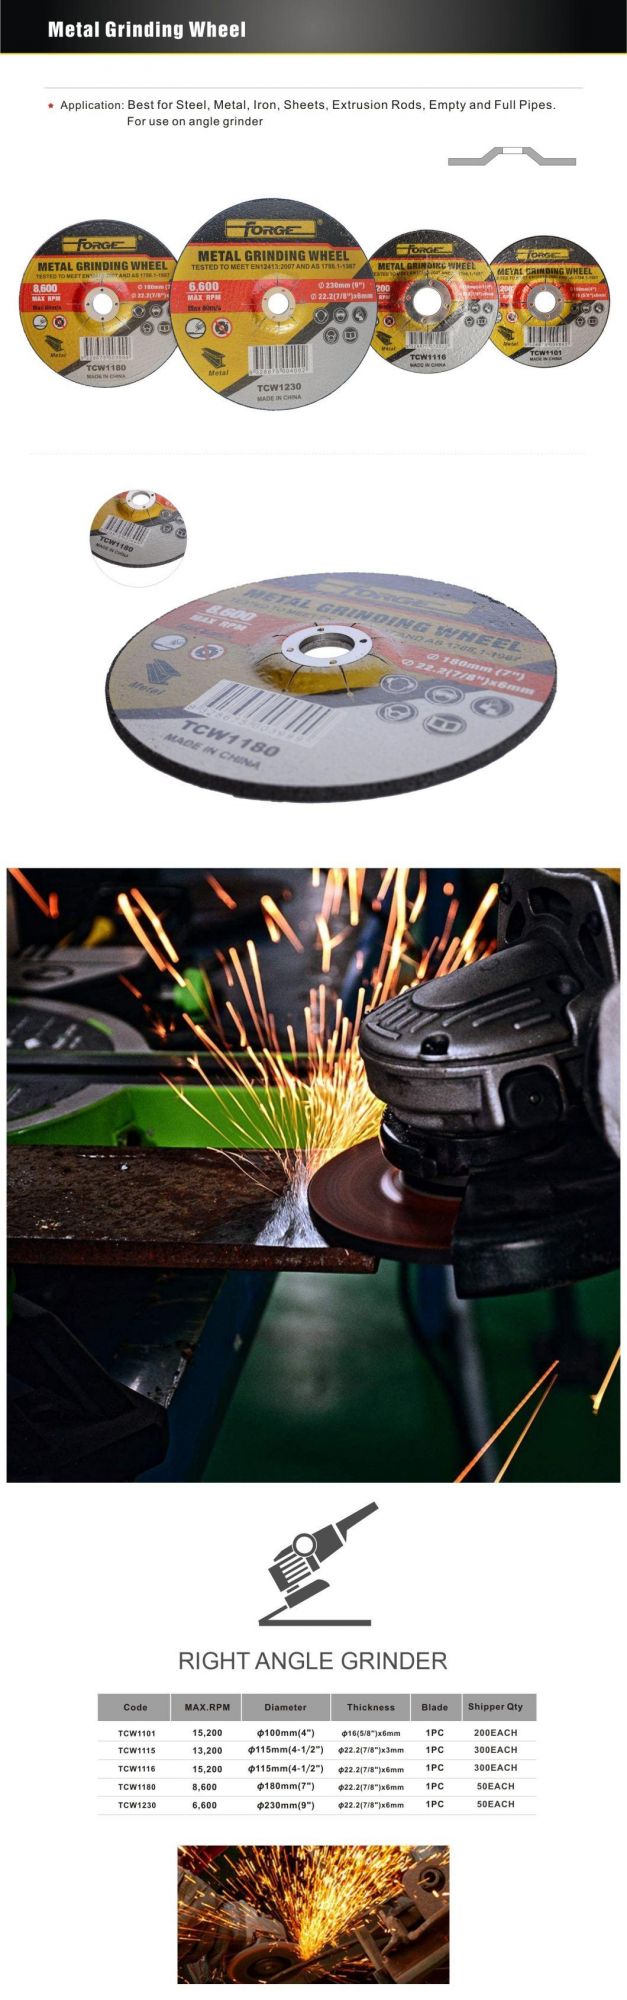 180*6*22.2mm Depressed Center Metal Abrasive Disc Grinding Wheel